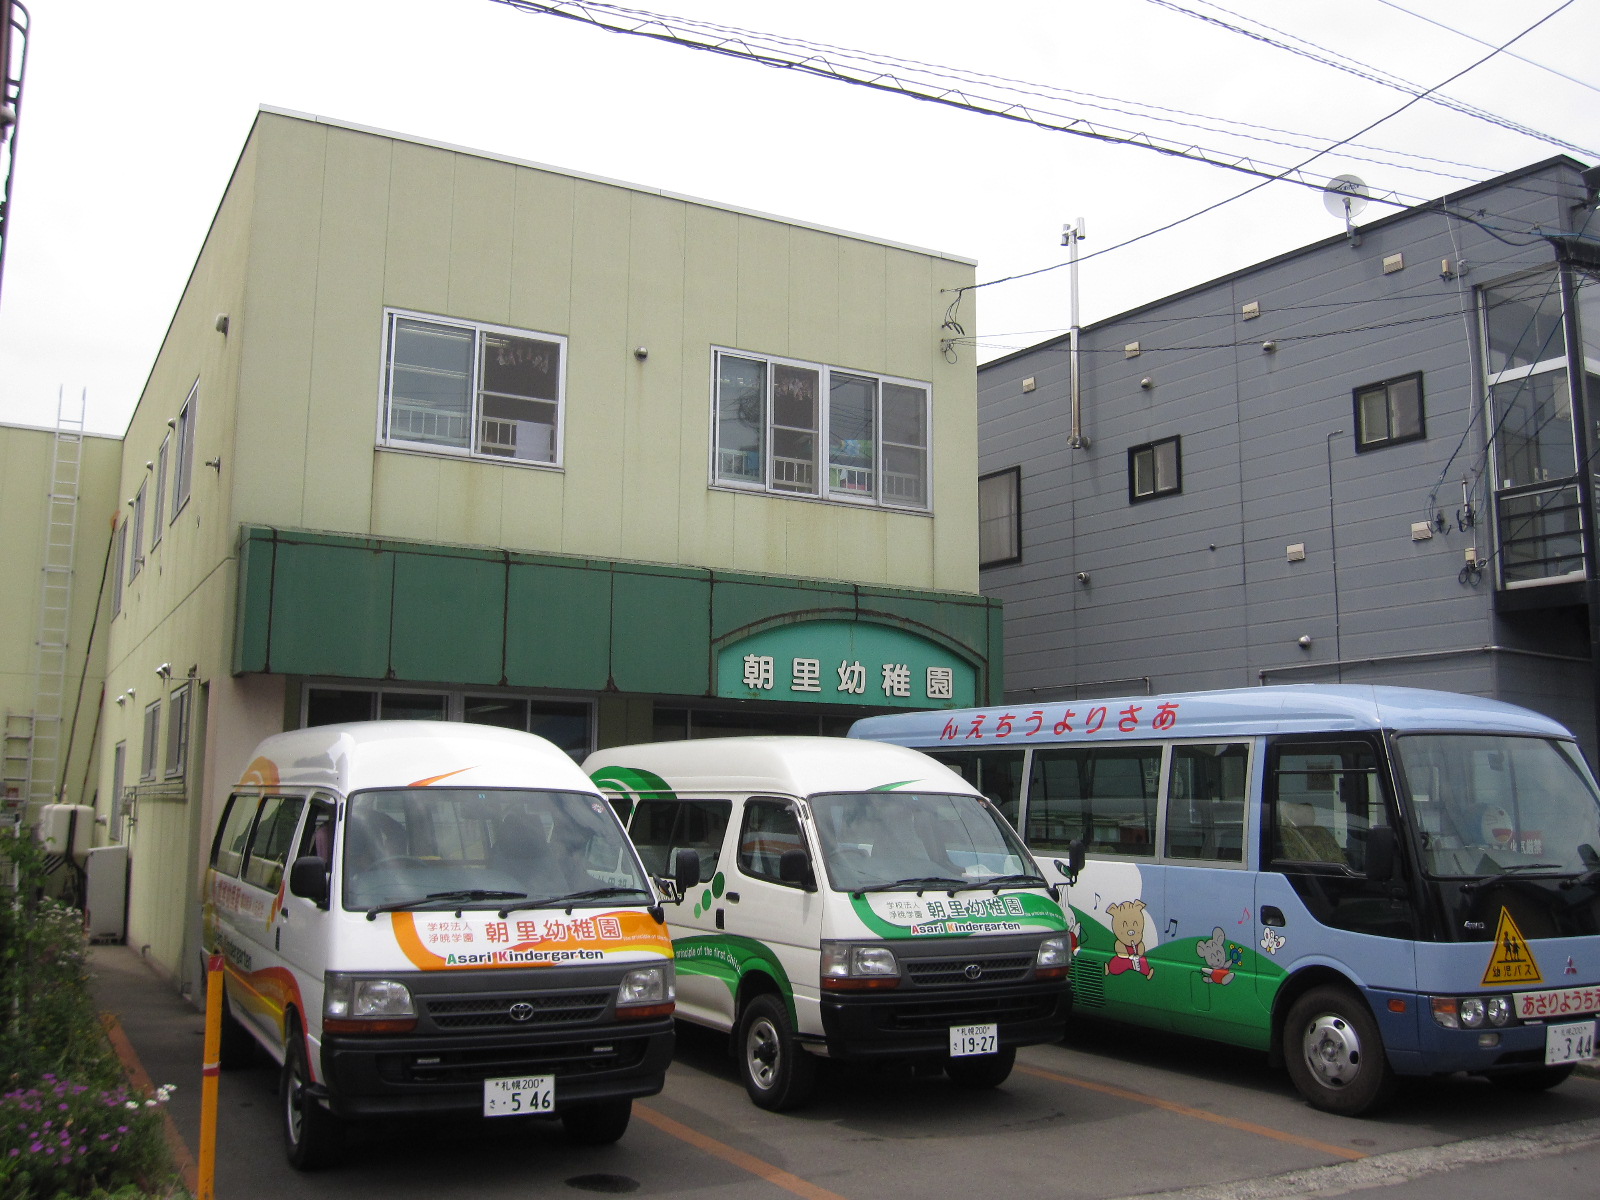 kindergarten ・ Nursery. Asari kindergarten (kindergarten ・ 307m to the nursery)